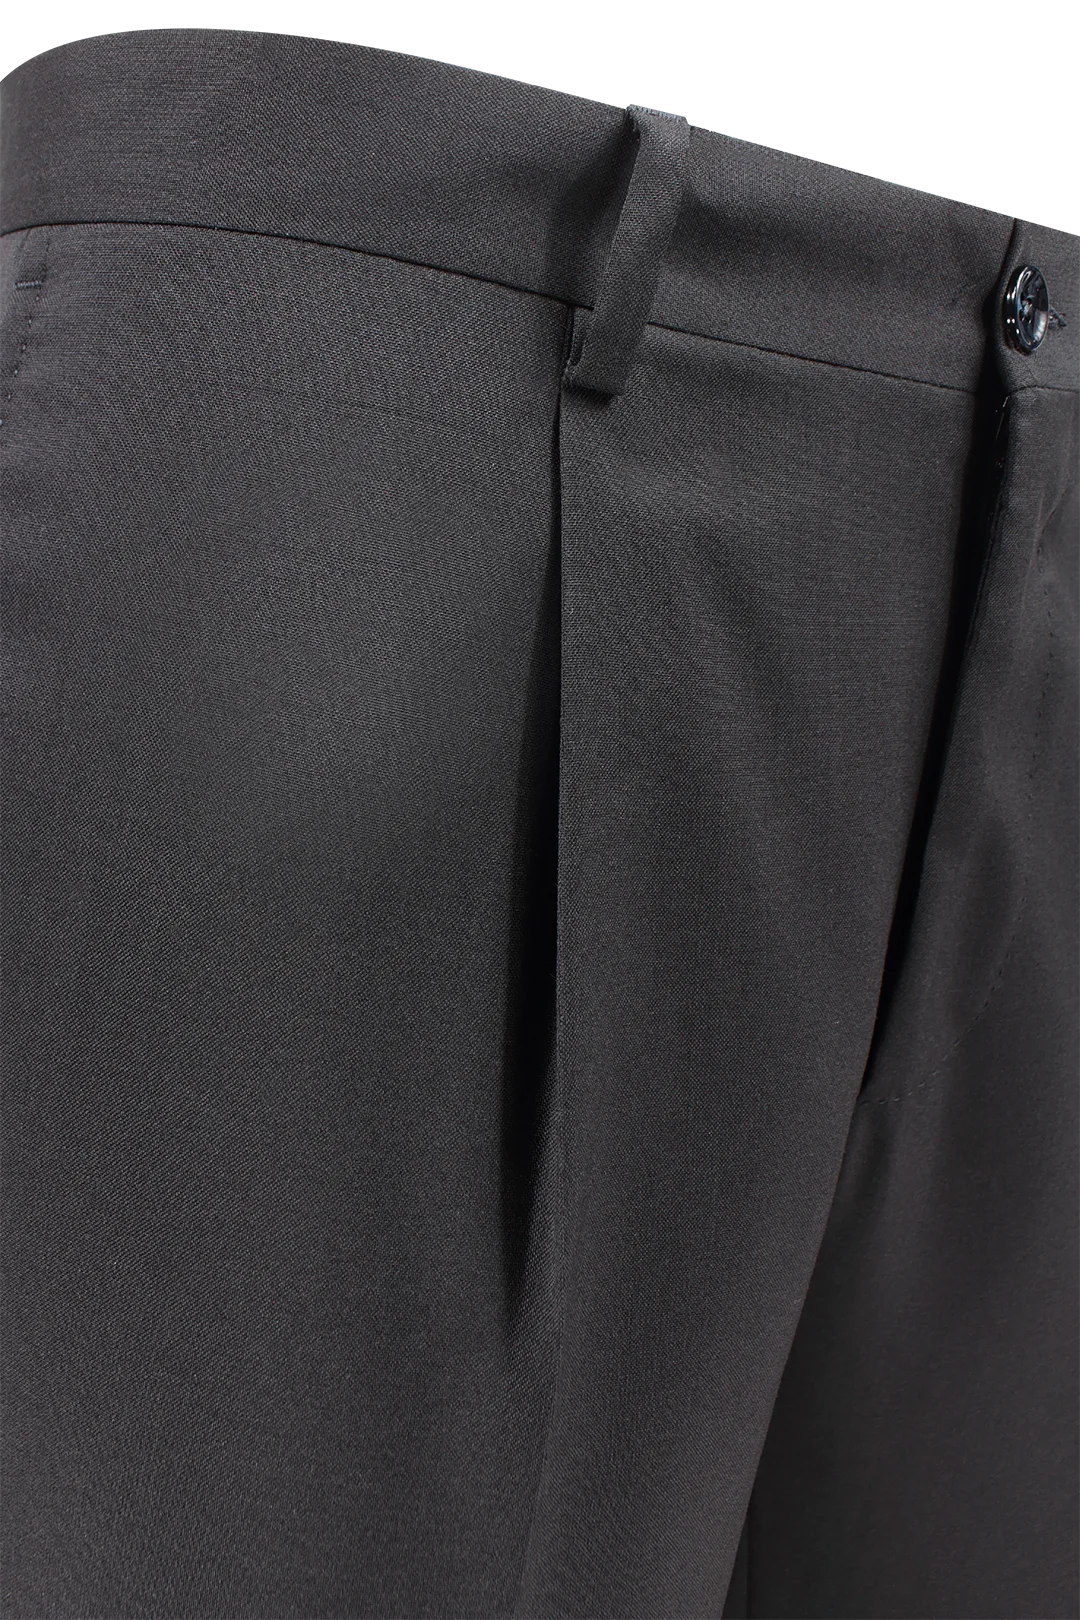 Pantalone con pince in tela di lana nera pince